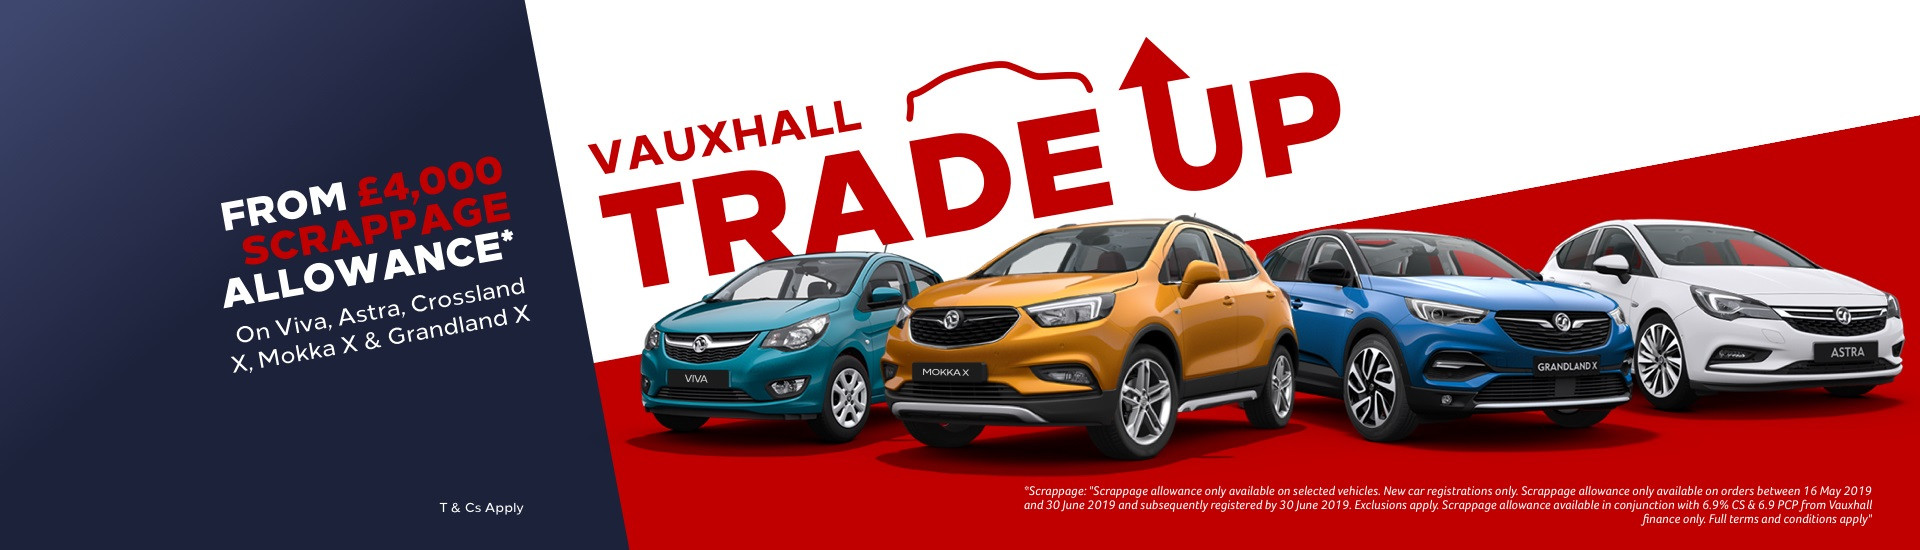 Vauxhall Trade Up